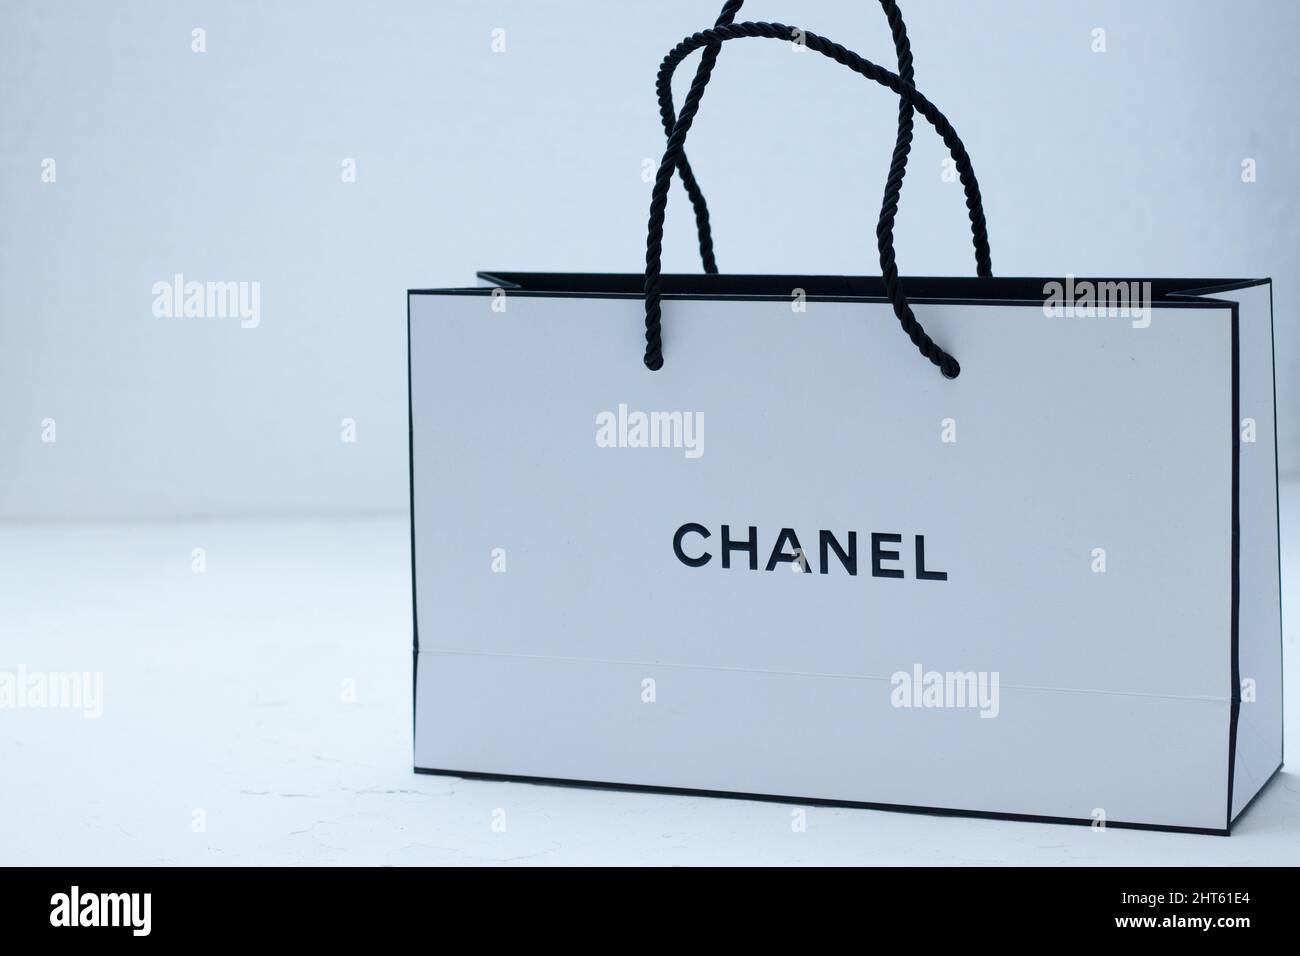 Chanel Paper Bag